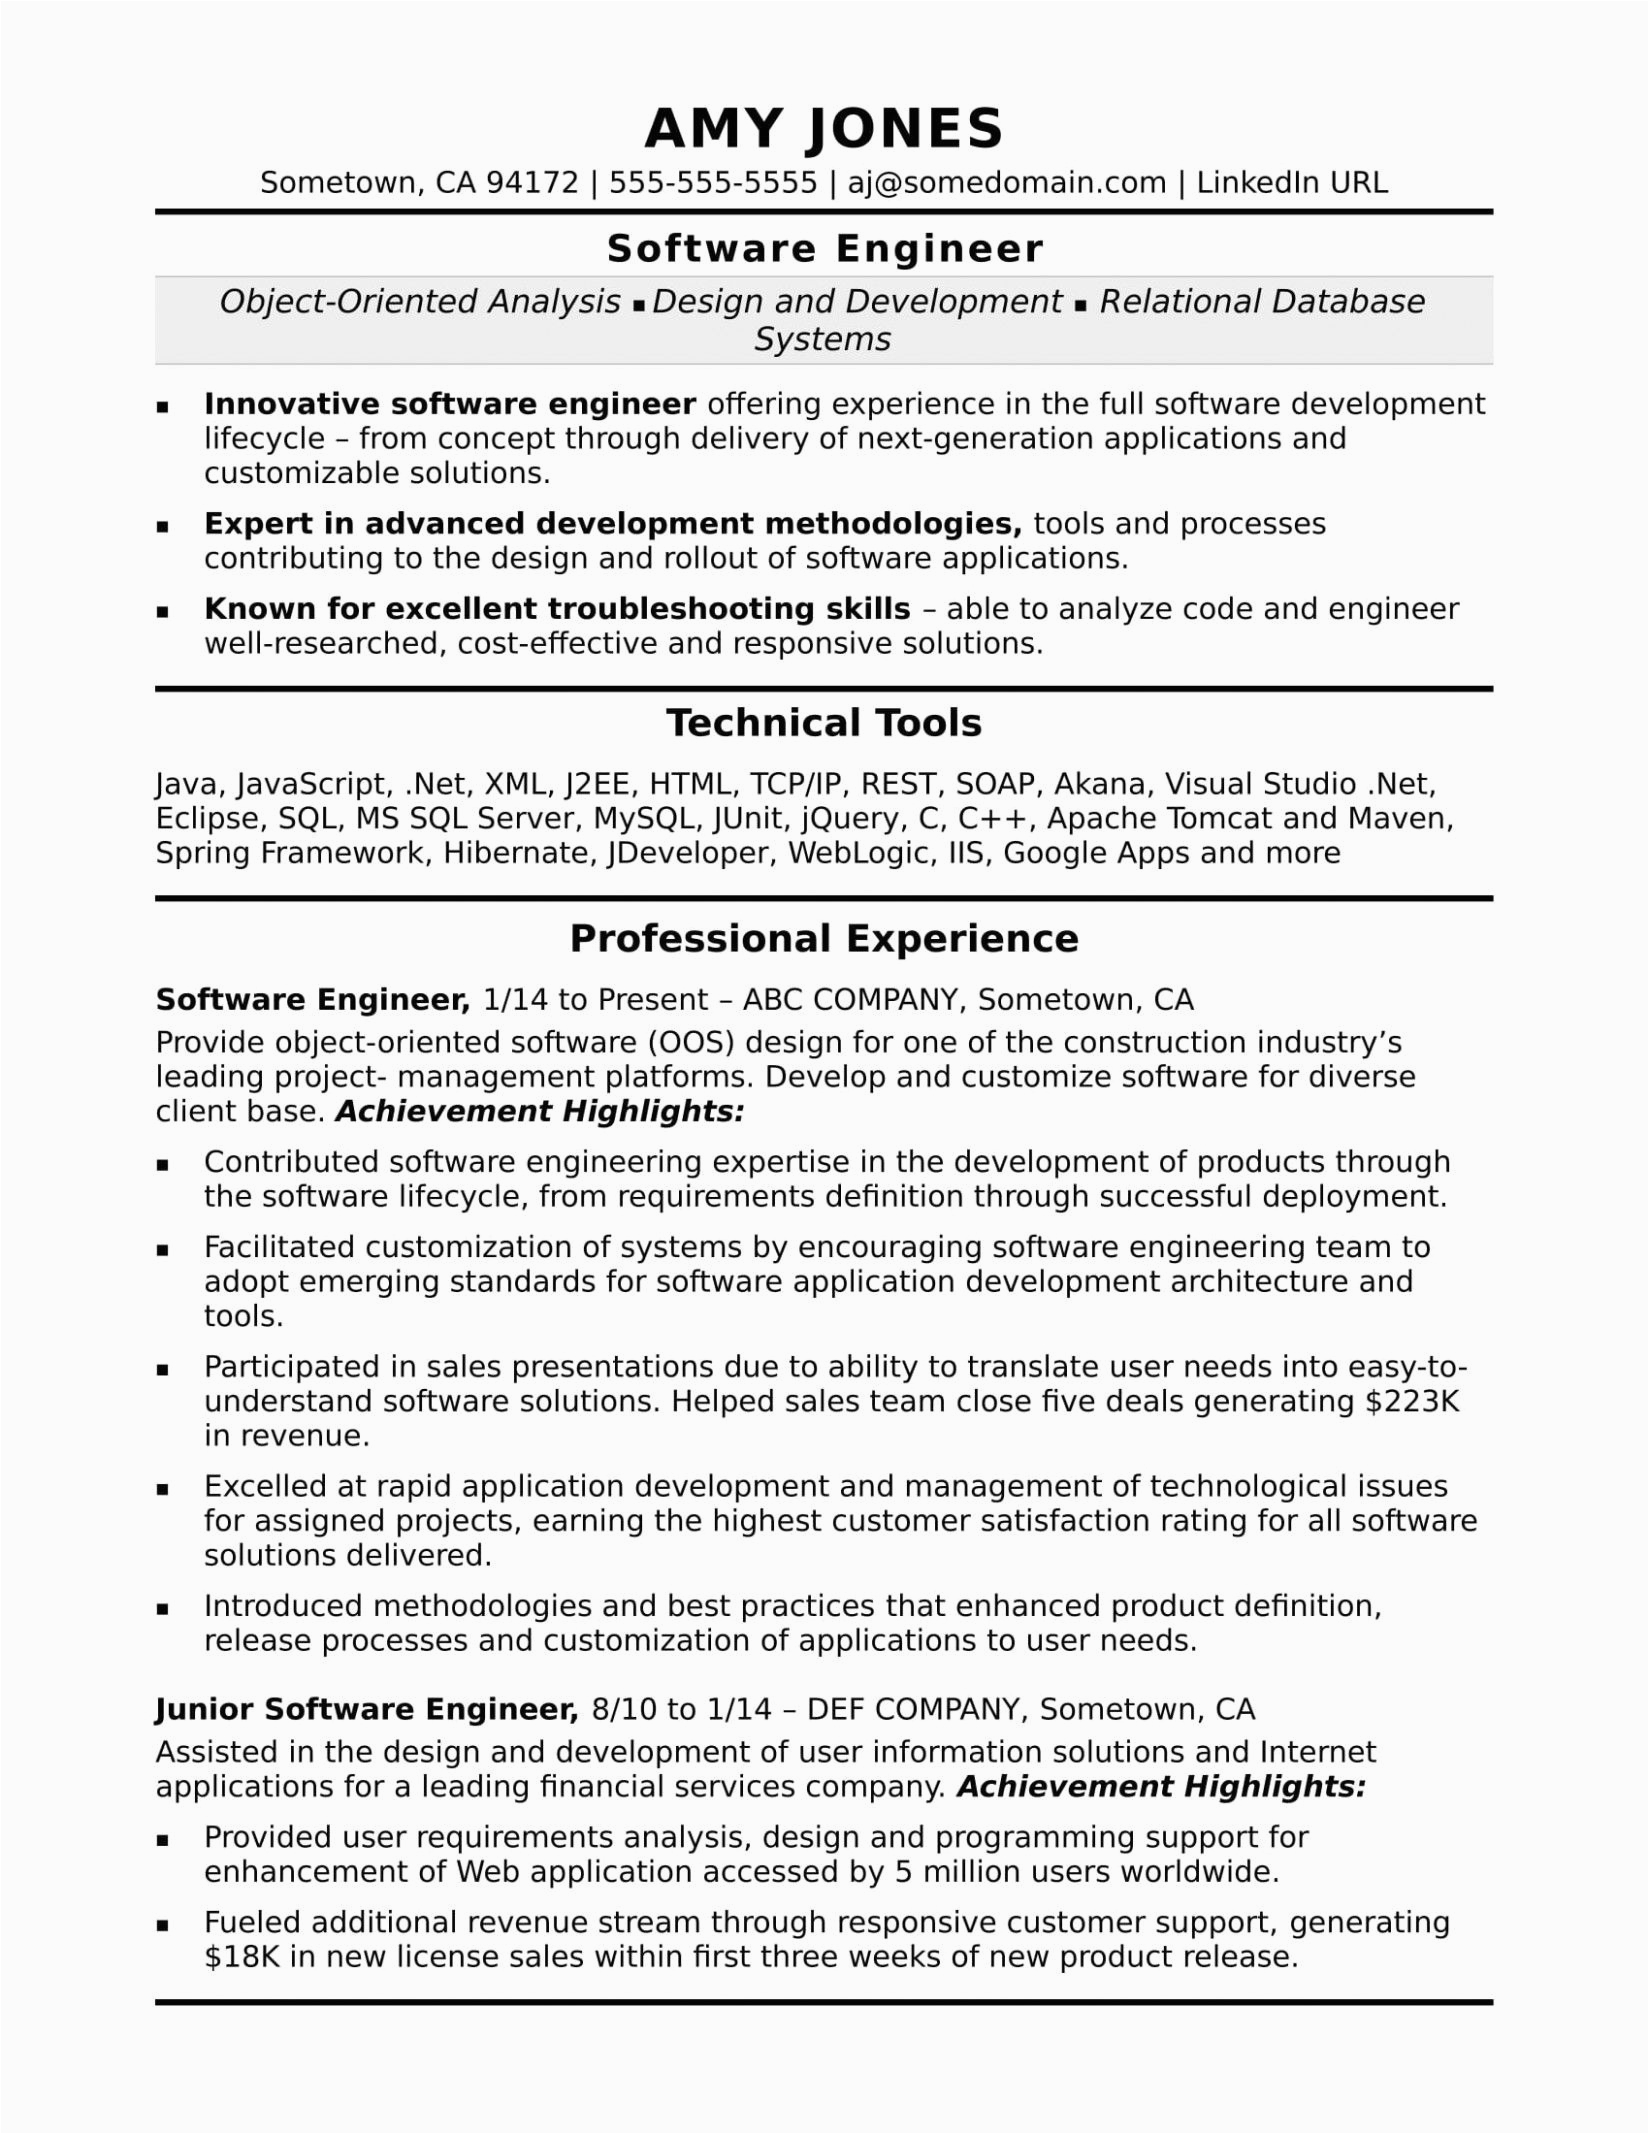 Sample Resume Headline for software Engineer Fresher 13 Engineer Resume Profile Examples